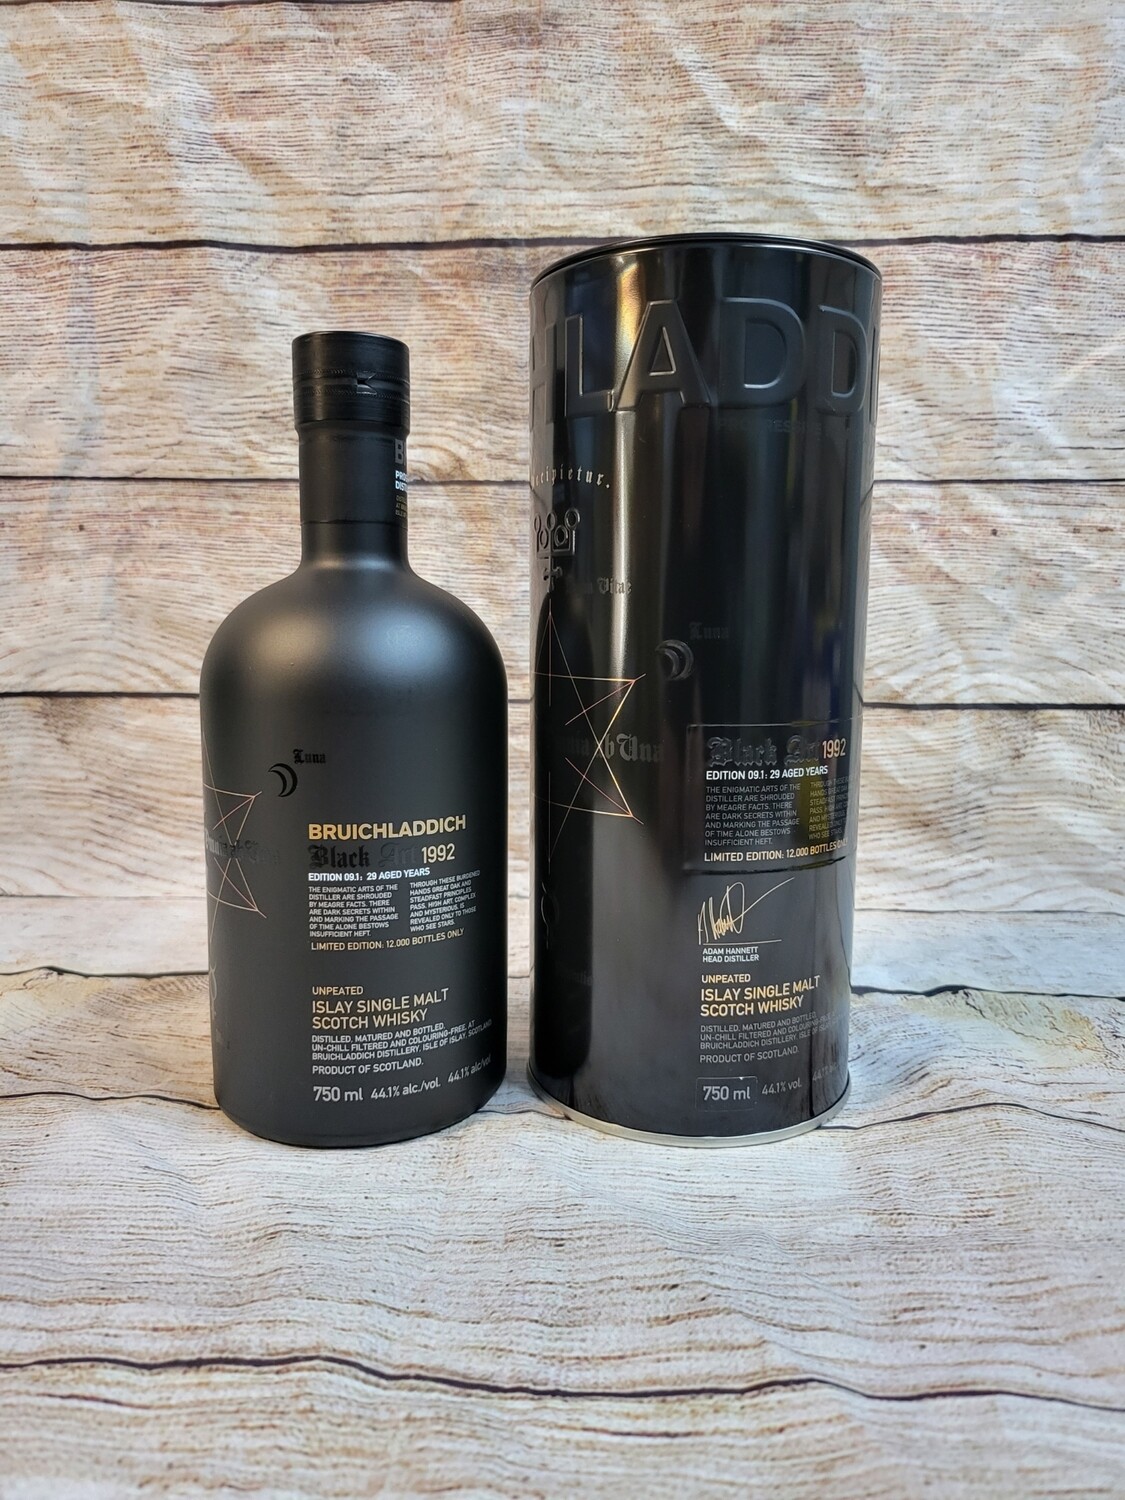 Bruichladdich Black Art 9 Single Malt Scotch Whisky 750ml